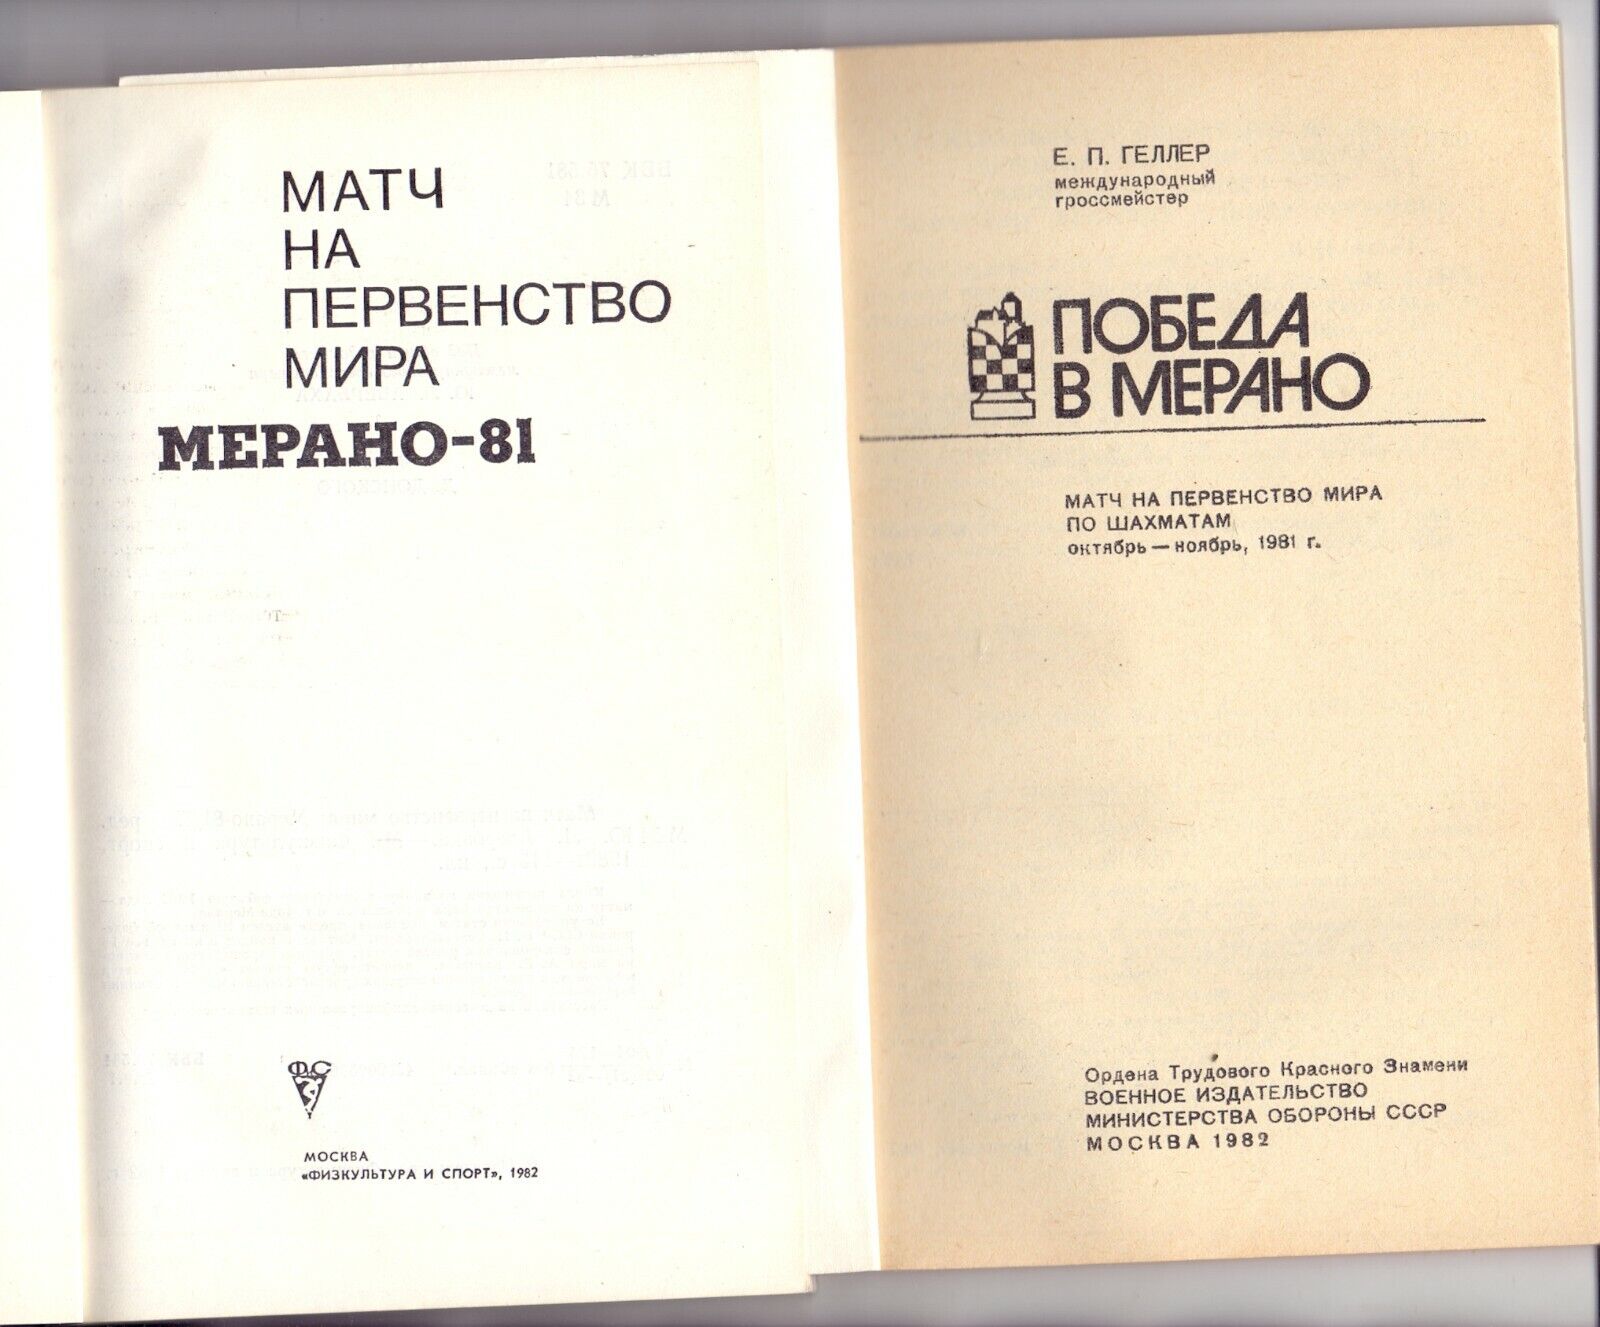 11636.Set of 2 Russian chess books: Geller, Averbakh. Merano-81. Victory in Merano